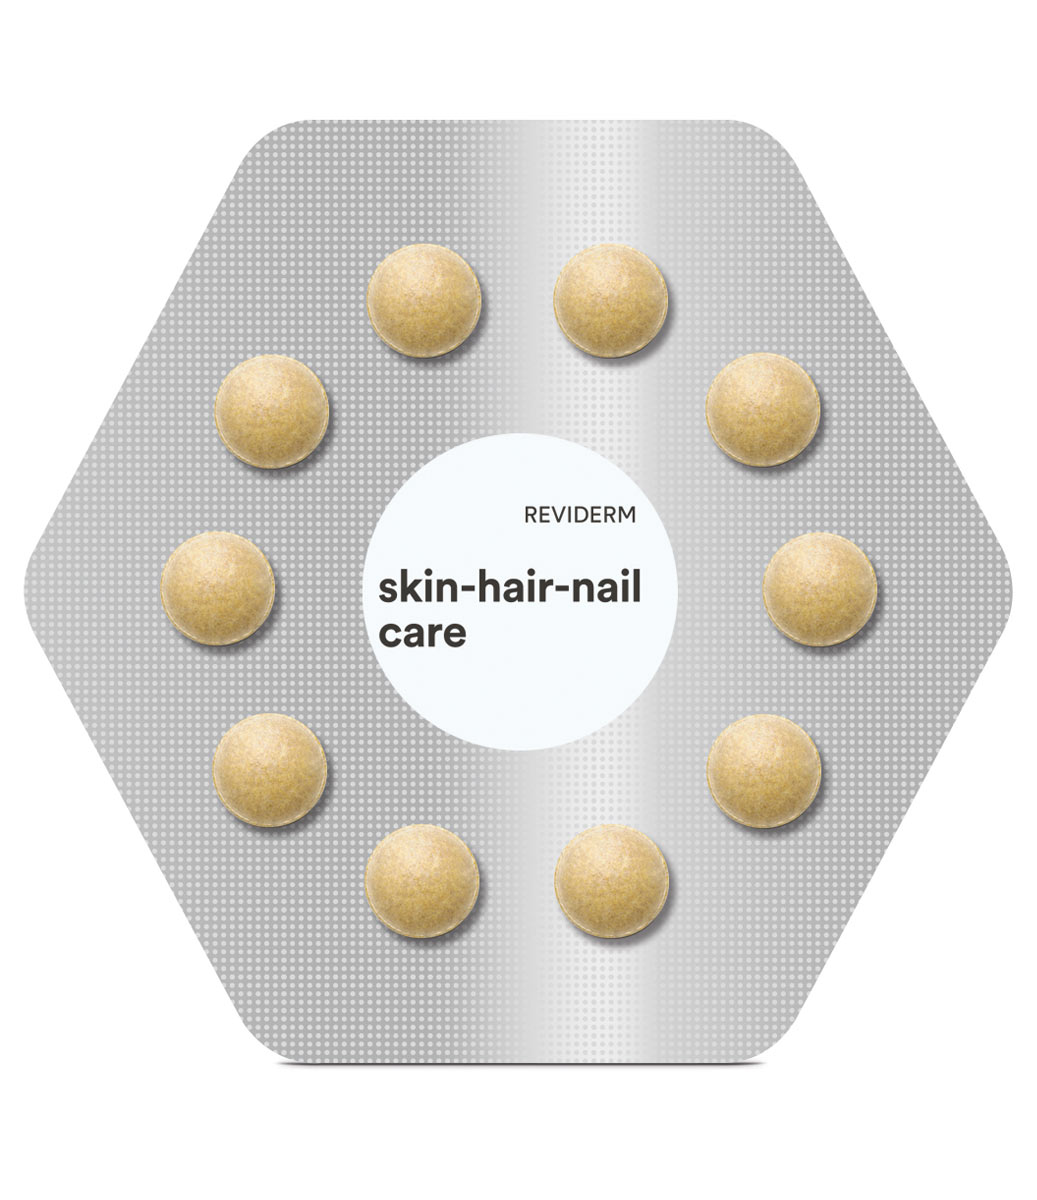 nutricosmetics skin-hair-nail care